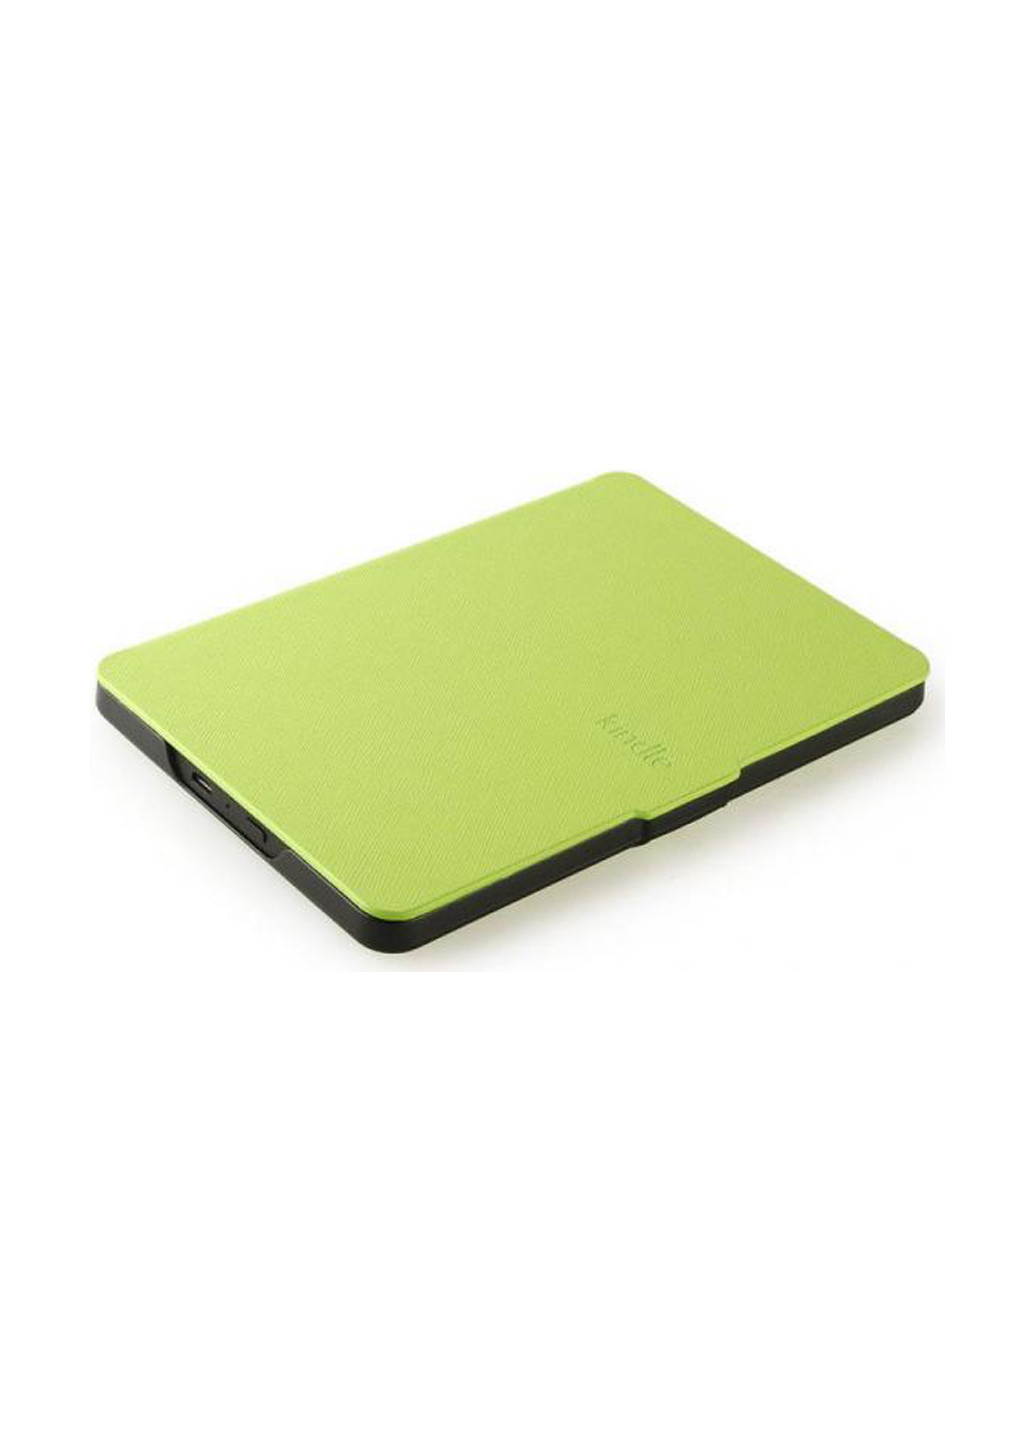 Чохол Premium для Amazon Kindle PaperWhite (2015-2016) green (4822356754495) Airon premium для электронной книги amazon kindle paperwhite (2015-2016) green (4822356754495) (158554709)